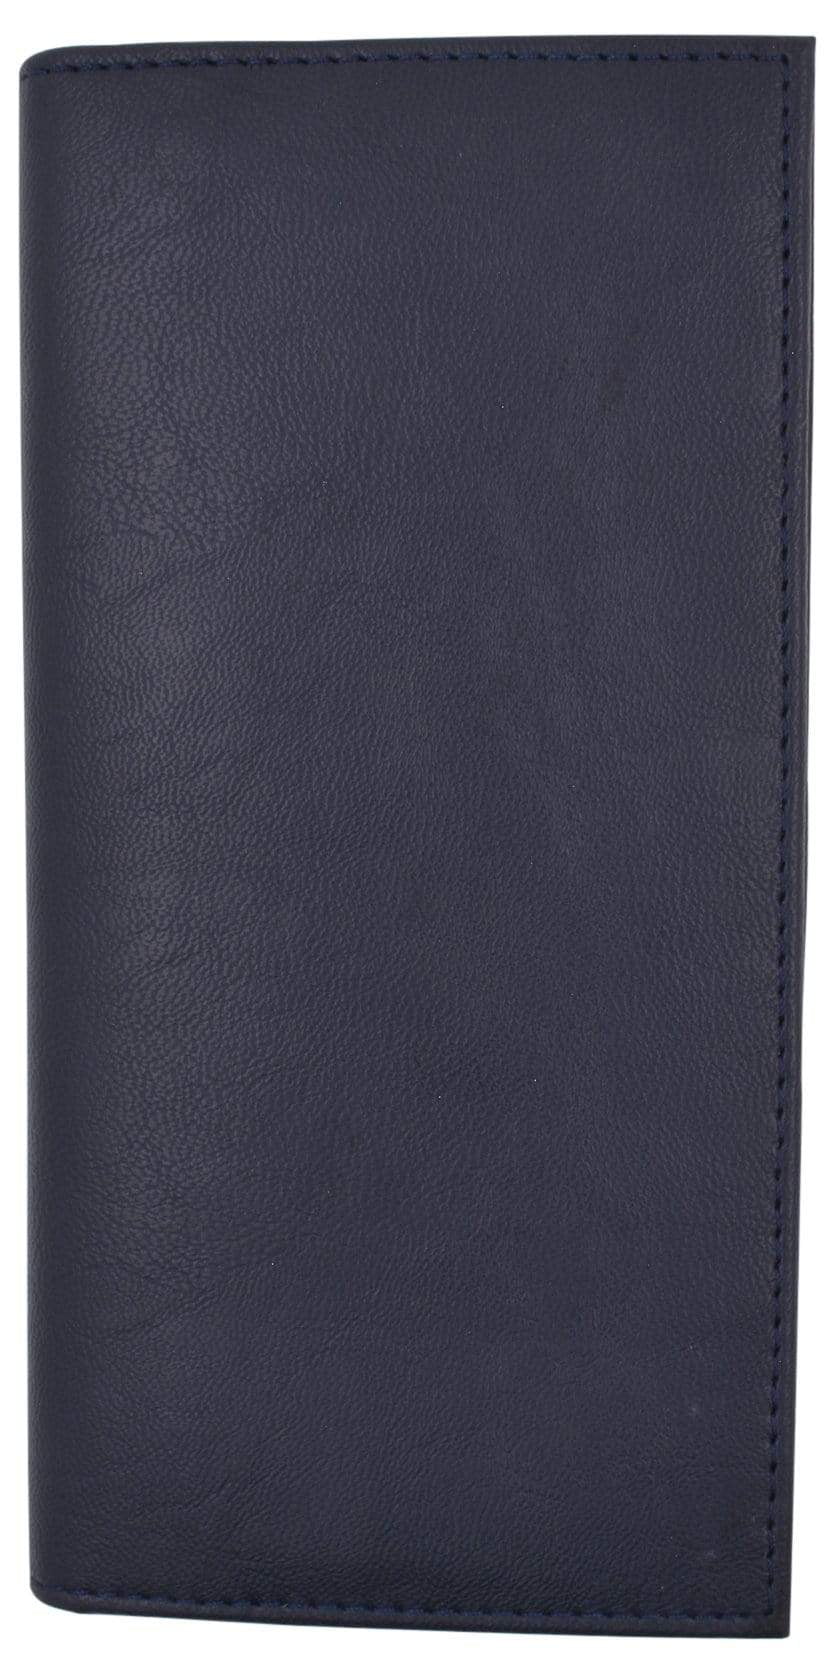 Basic PU Leather Blue Checkbook Covers - Walmart.com